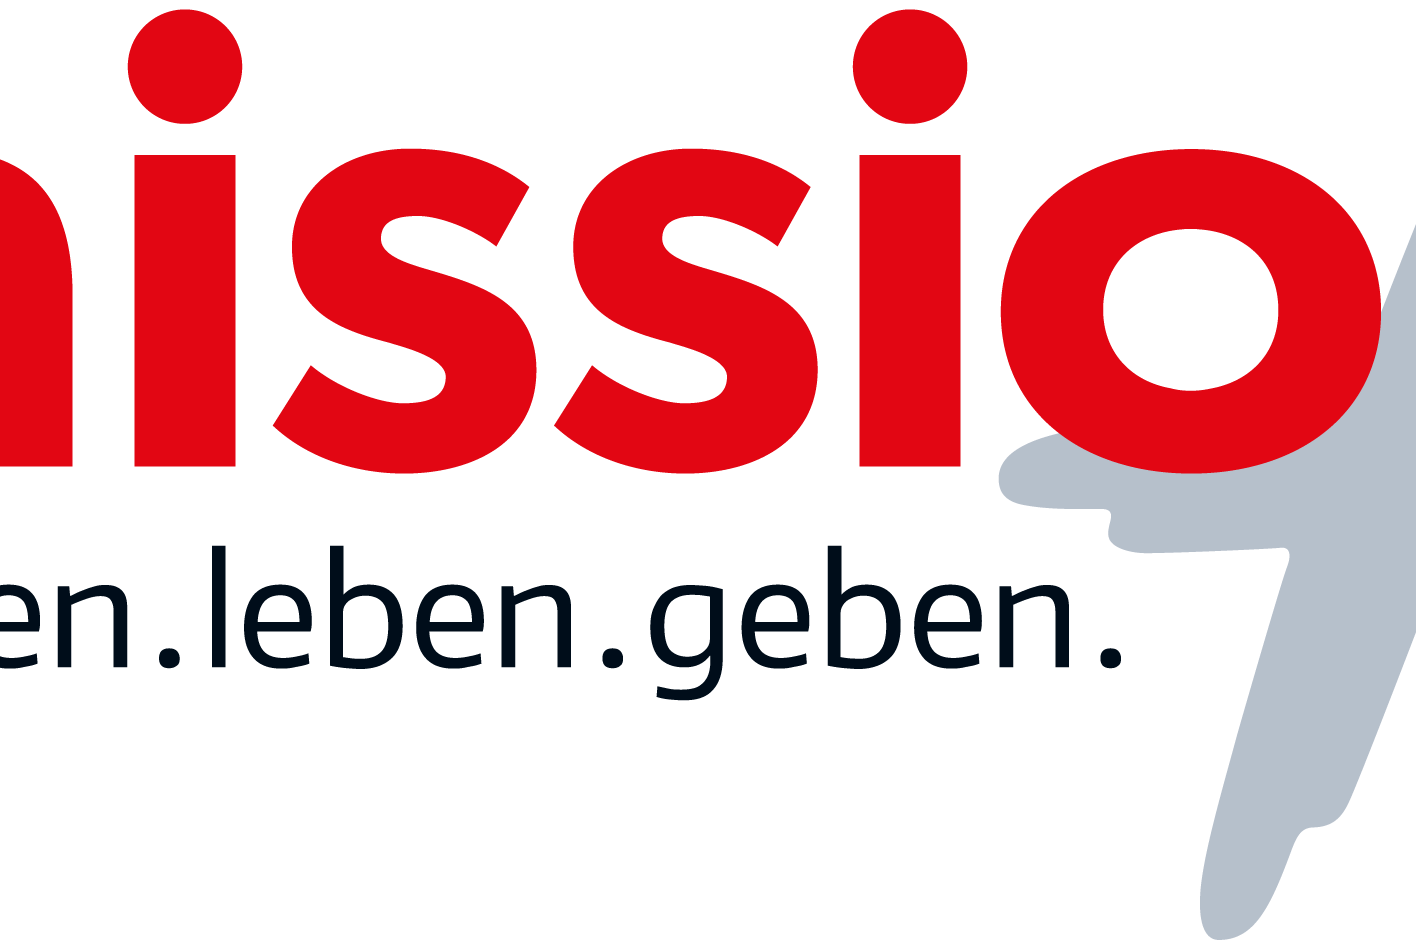 missio-Logo